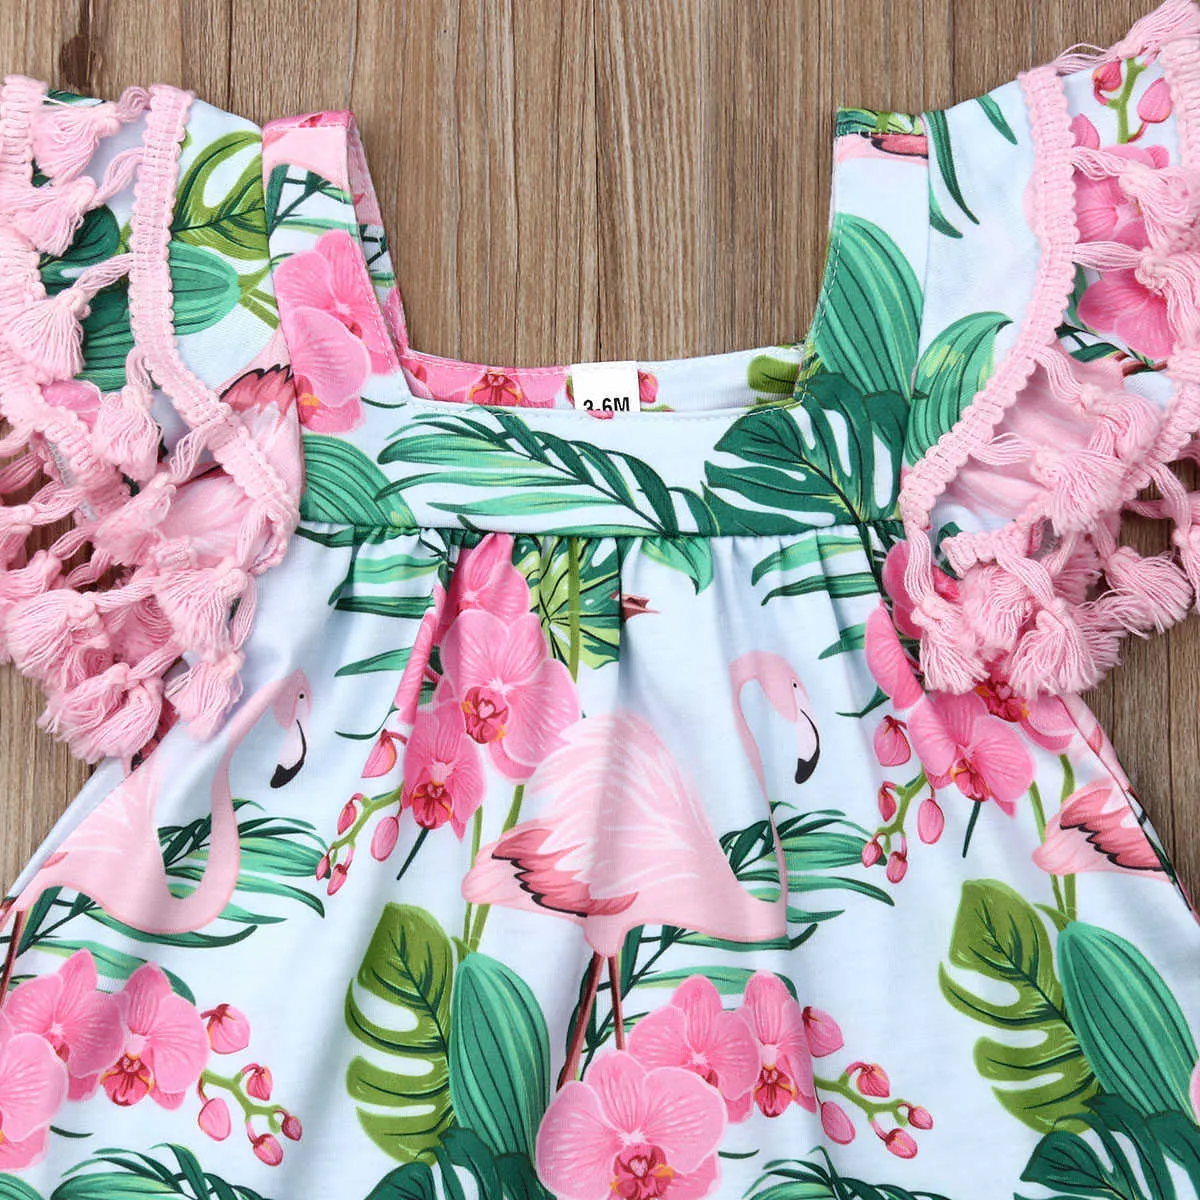 2019 Newborn Baby Dresses for Girls Toddler Clothes Summer Tassel Short Sleeve Flower Flamingo Girls Dress Baby Girls Clothes Q0716